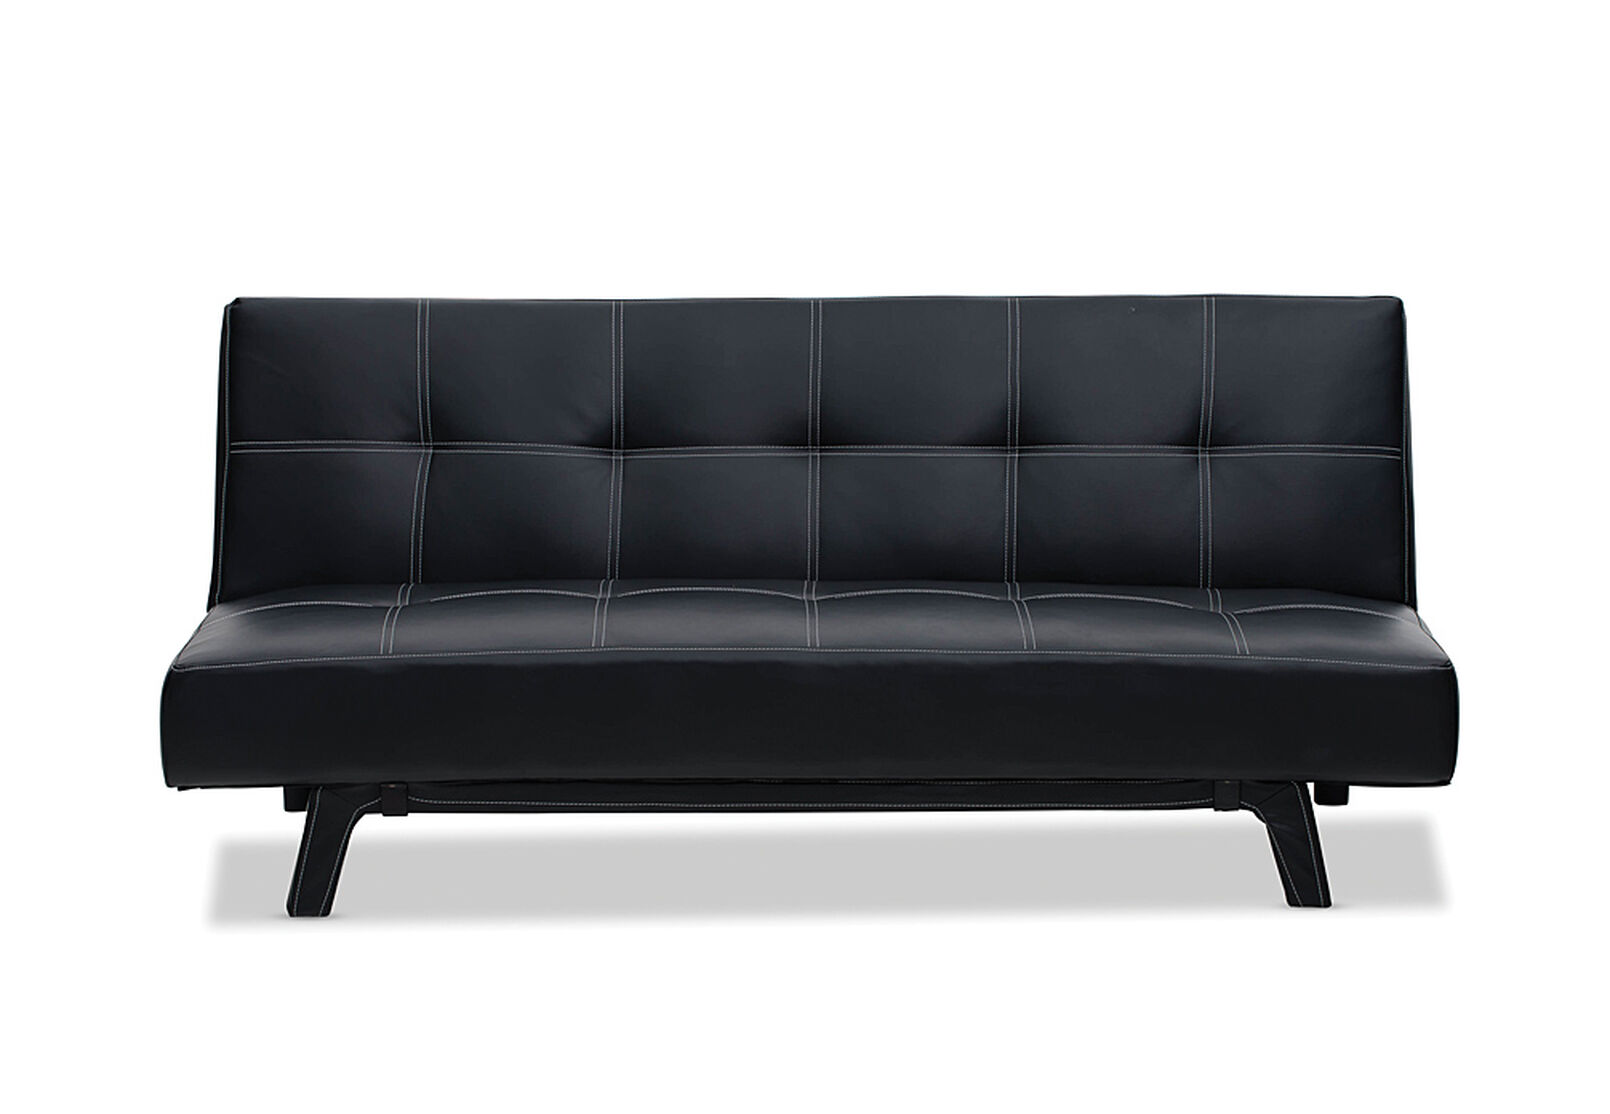 Clack Sofa Bed Amart Furniture, Futon Leather Cover